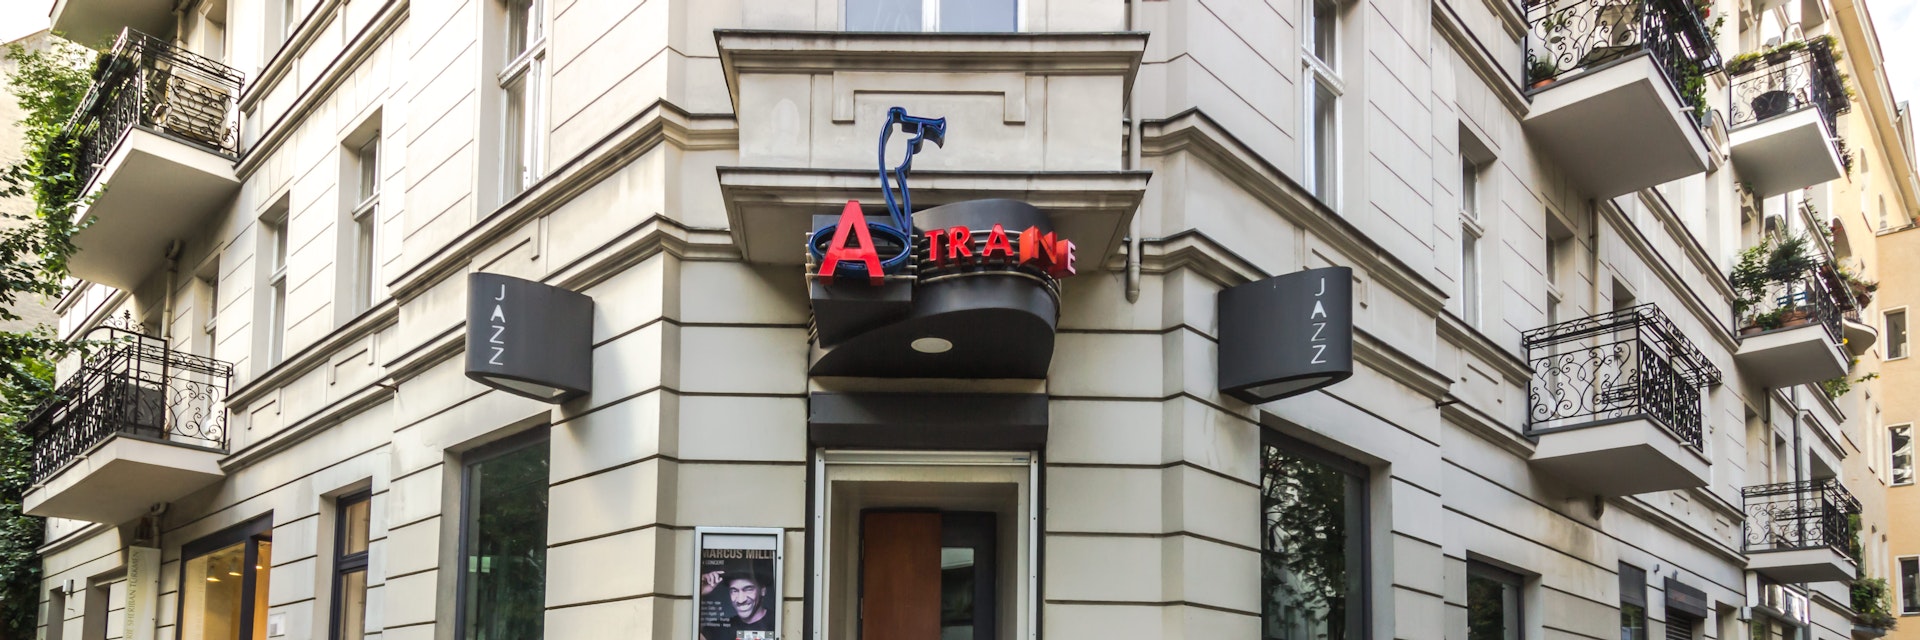 A-Trane, Jazz Bar Entrance